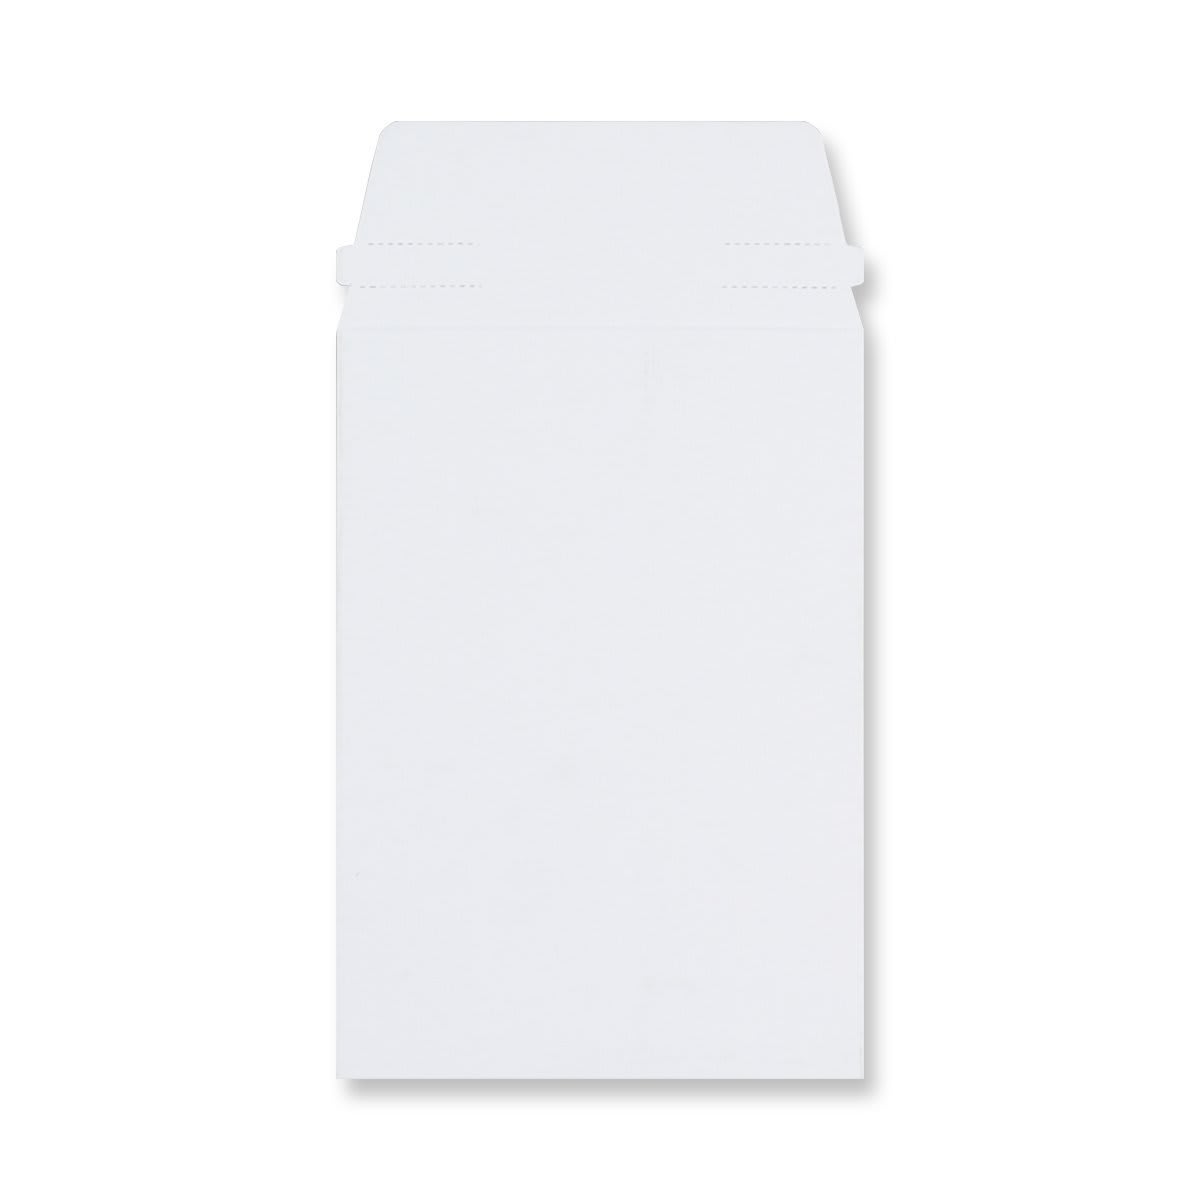 C6 White All Board Envelopes 162x114mm